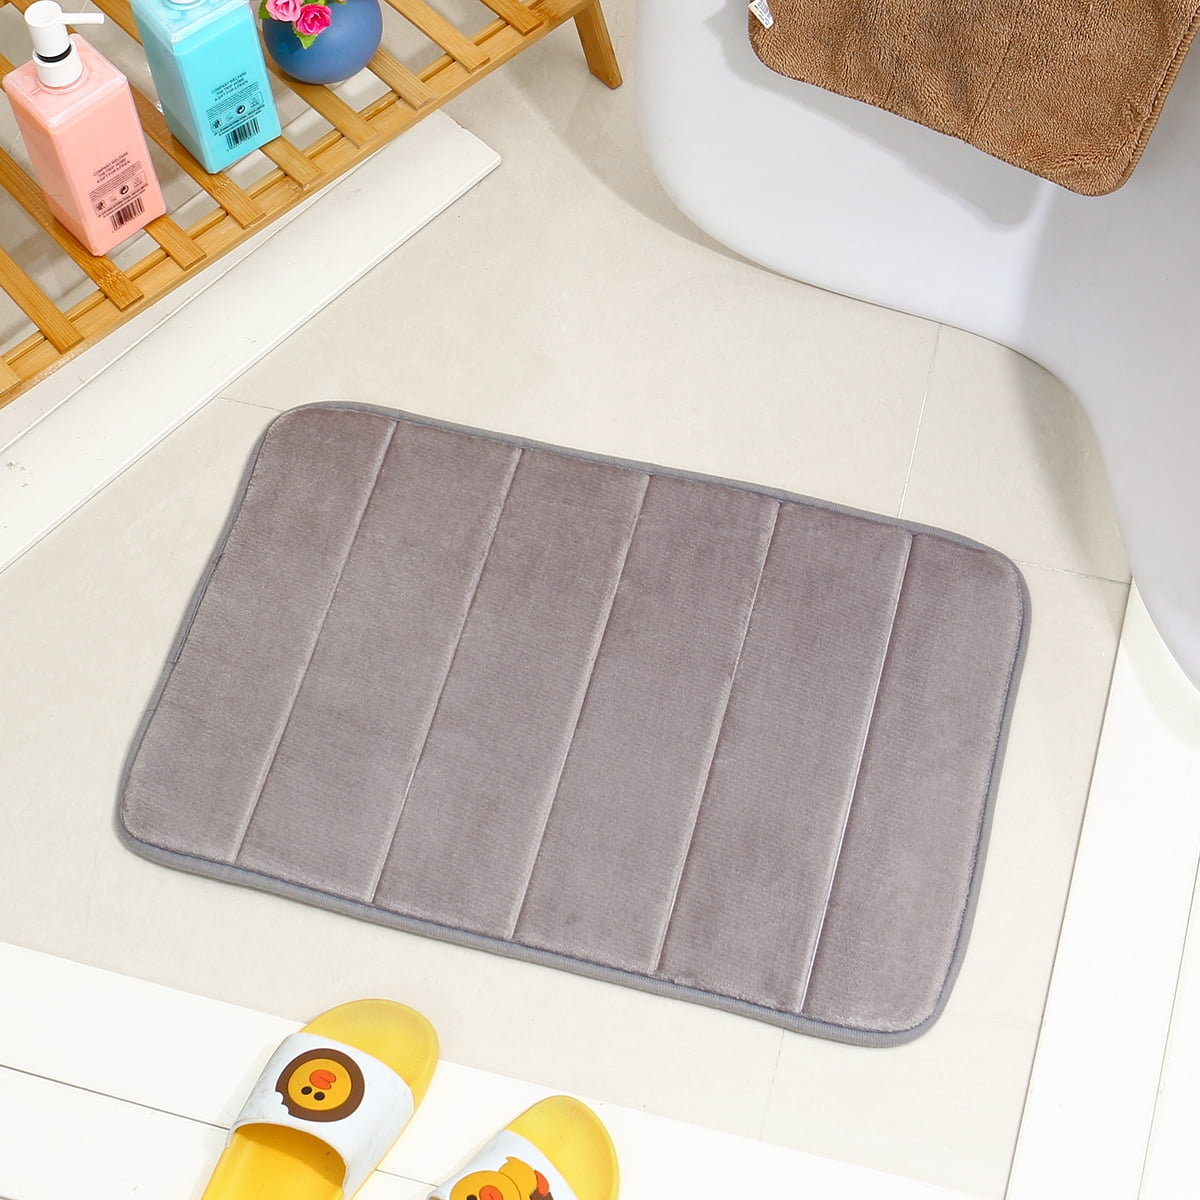 19.6 x 63 Microfiber Non Slip Absorbent Quickly Drying Bathroom Rug Carpet,Bathroom Floor Mats Water Absorbent osierr6 Long Memory Foam Bath Mat Coffee